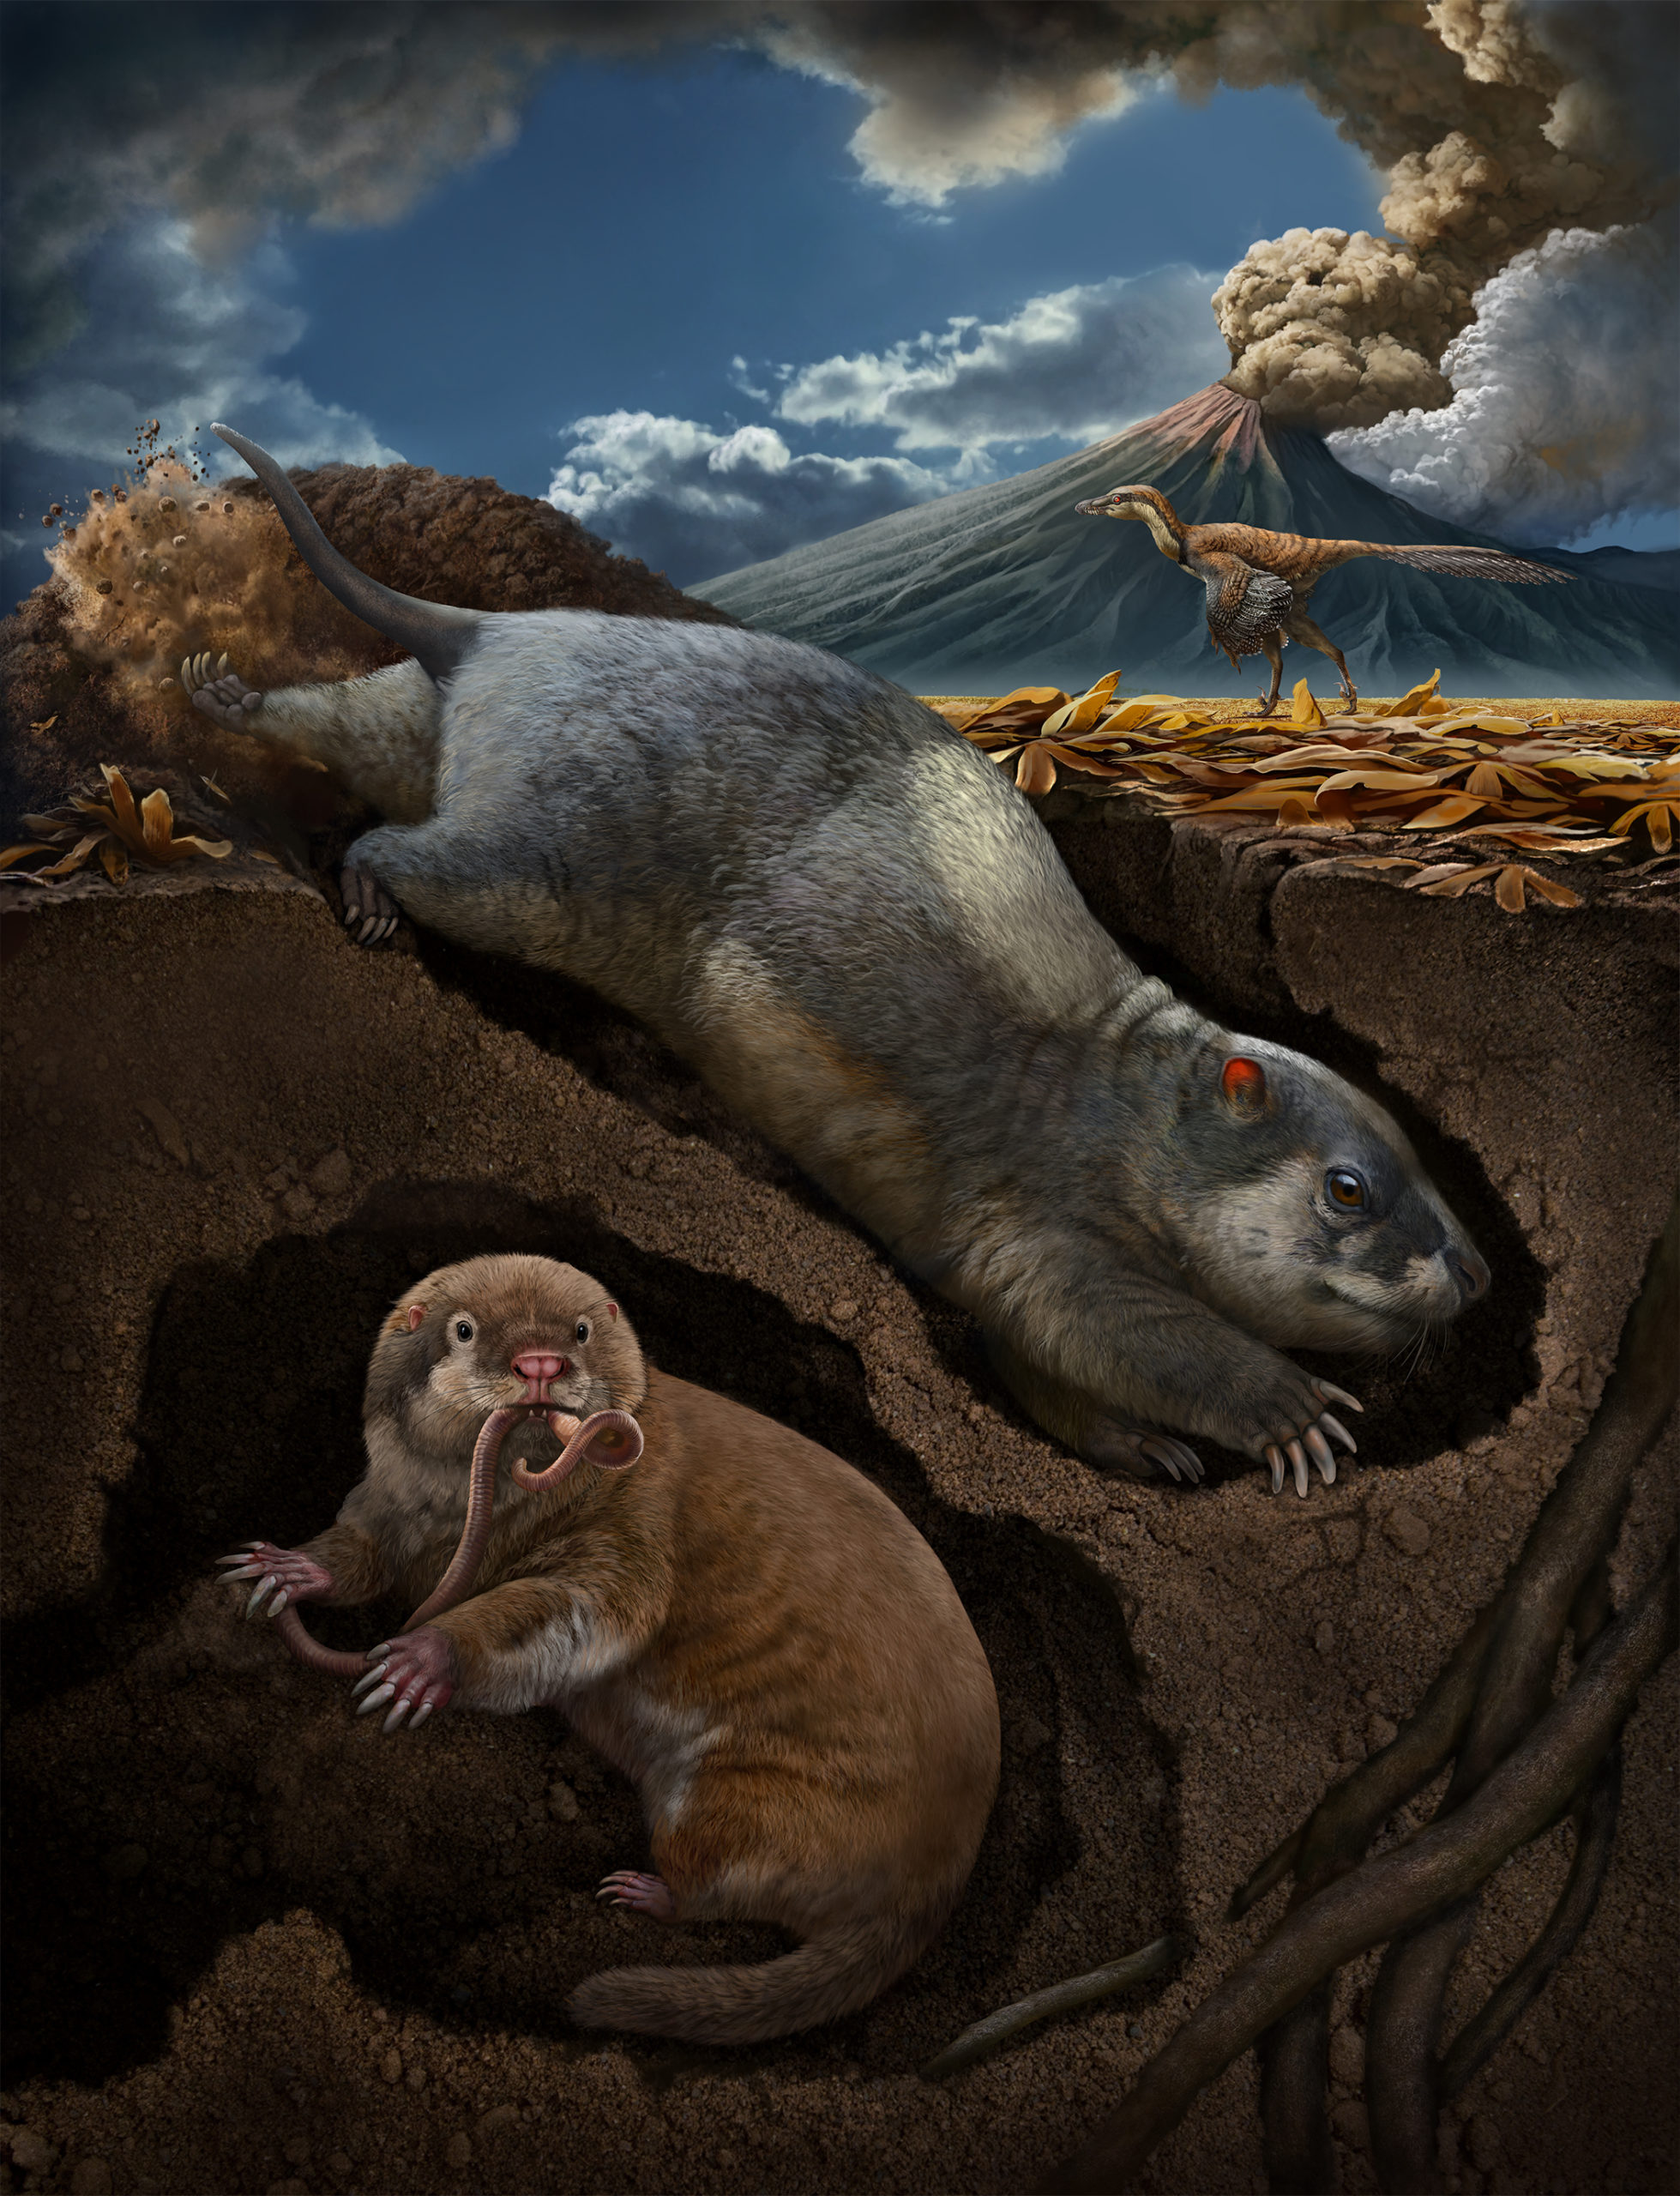 Fossiomanus sinensis (upper right) and Jueconodon cheni bottom left (Illustration: © Chuang Zhao)